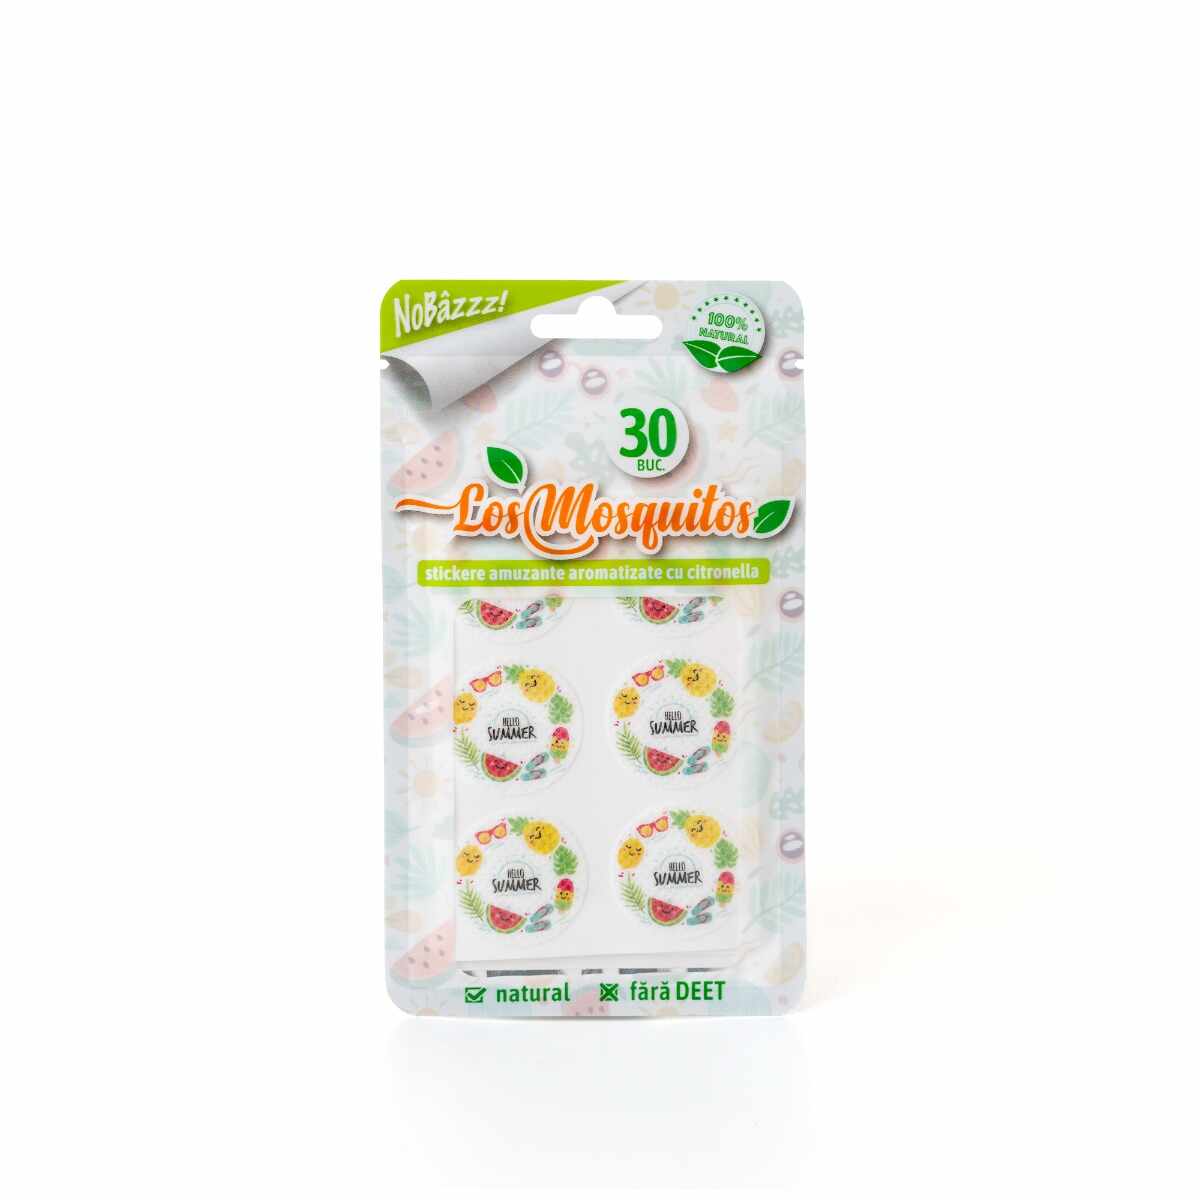 Stickere aromatizate cu citronella model summer, 30 bucati, Los Mosquitos